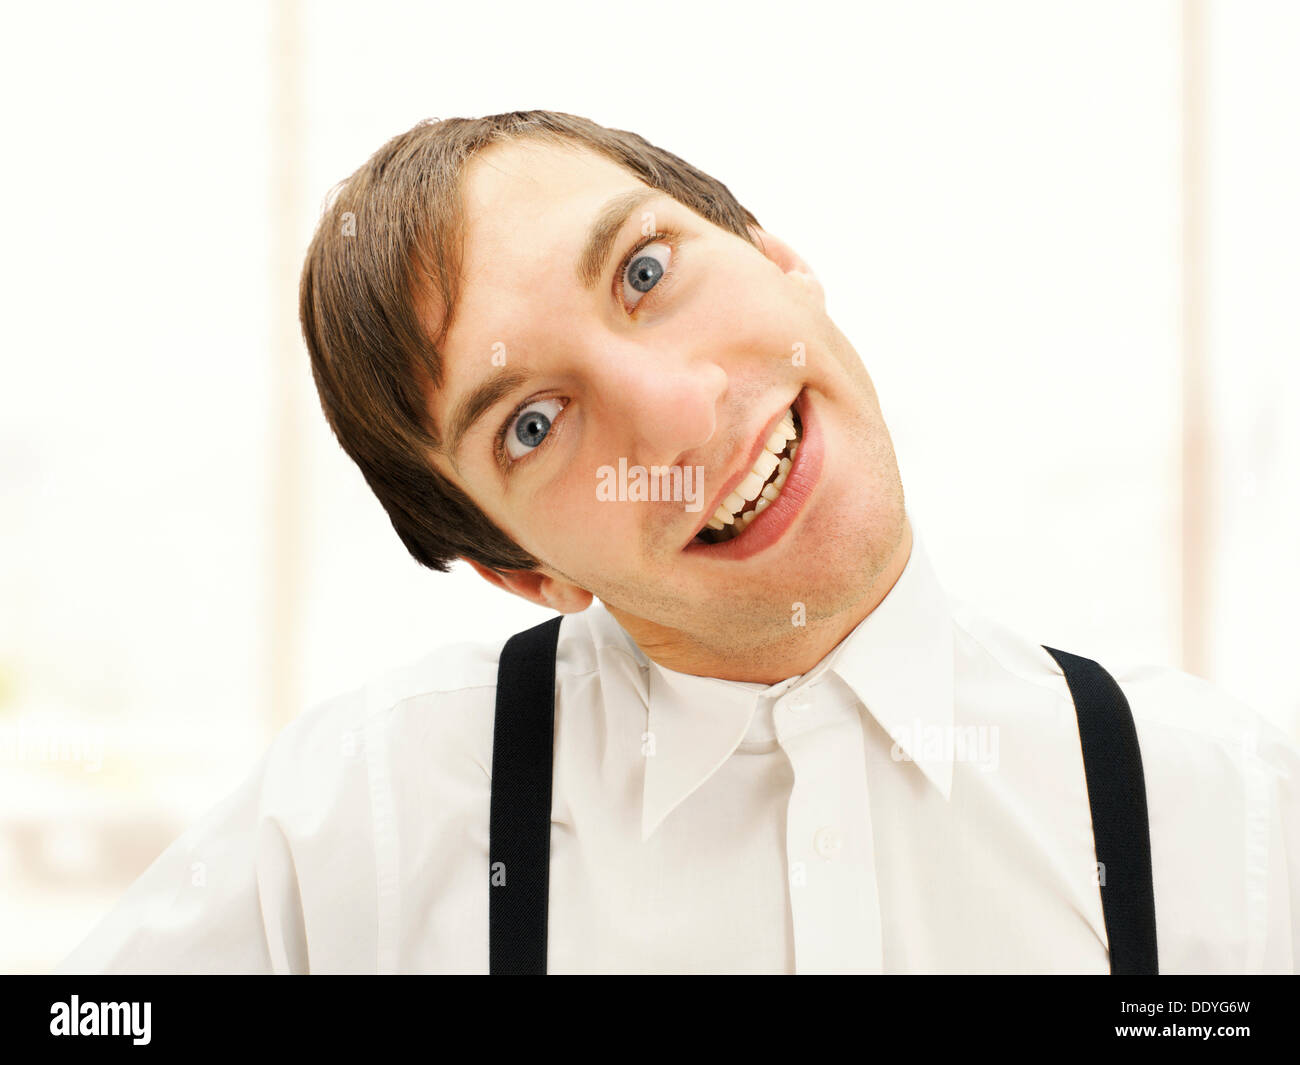 Buchhalter, Sachbearbeiter mit verrückten Gesichtsausdruck, Lächeln, Porträt Stockfoto